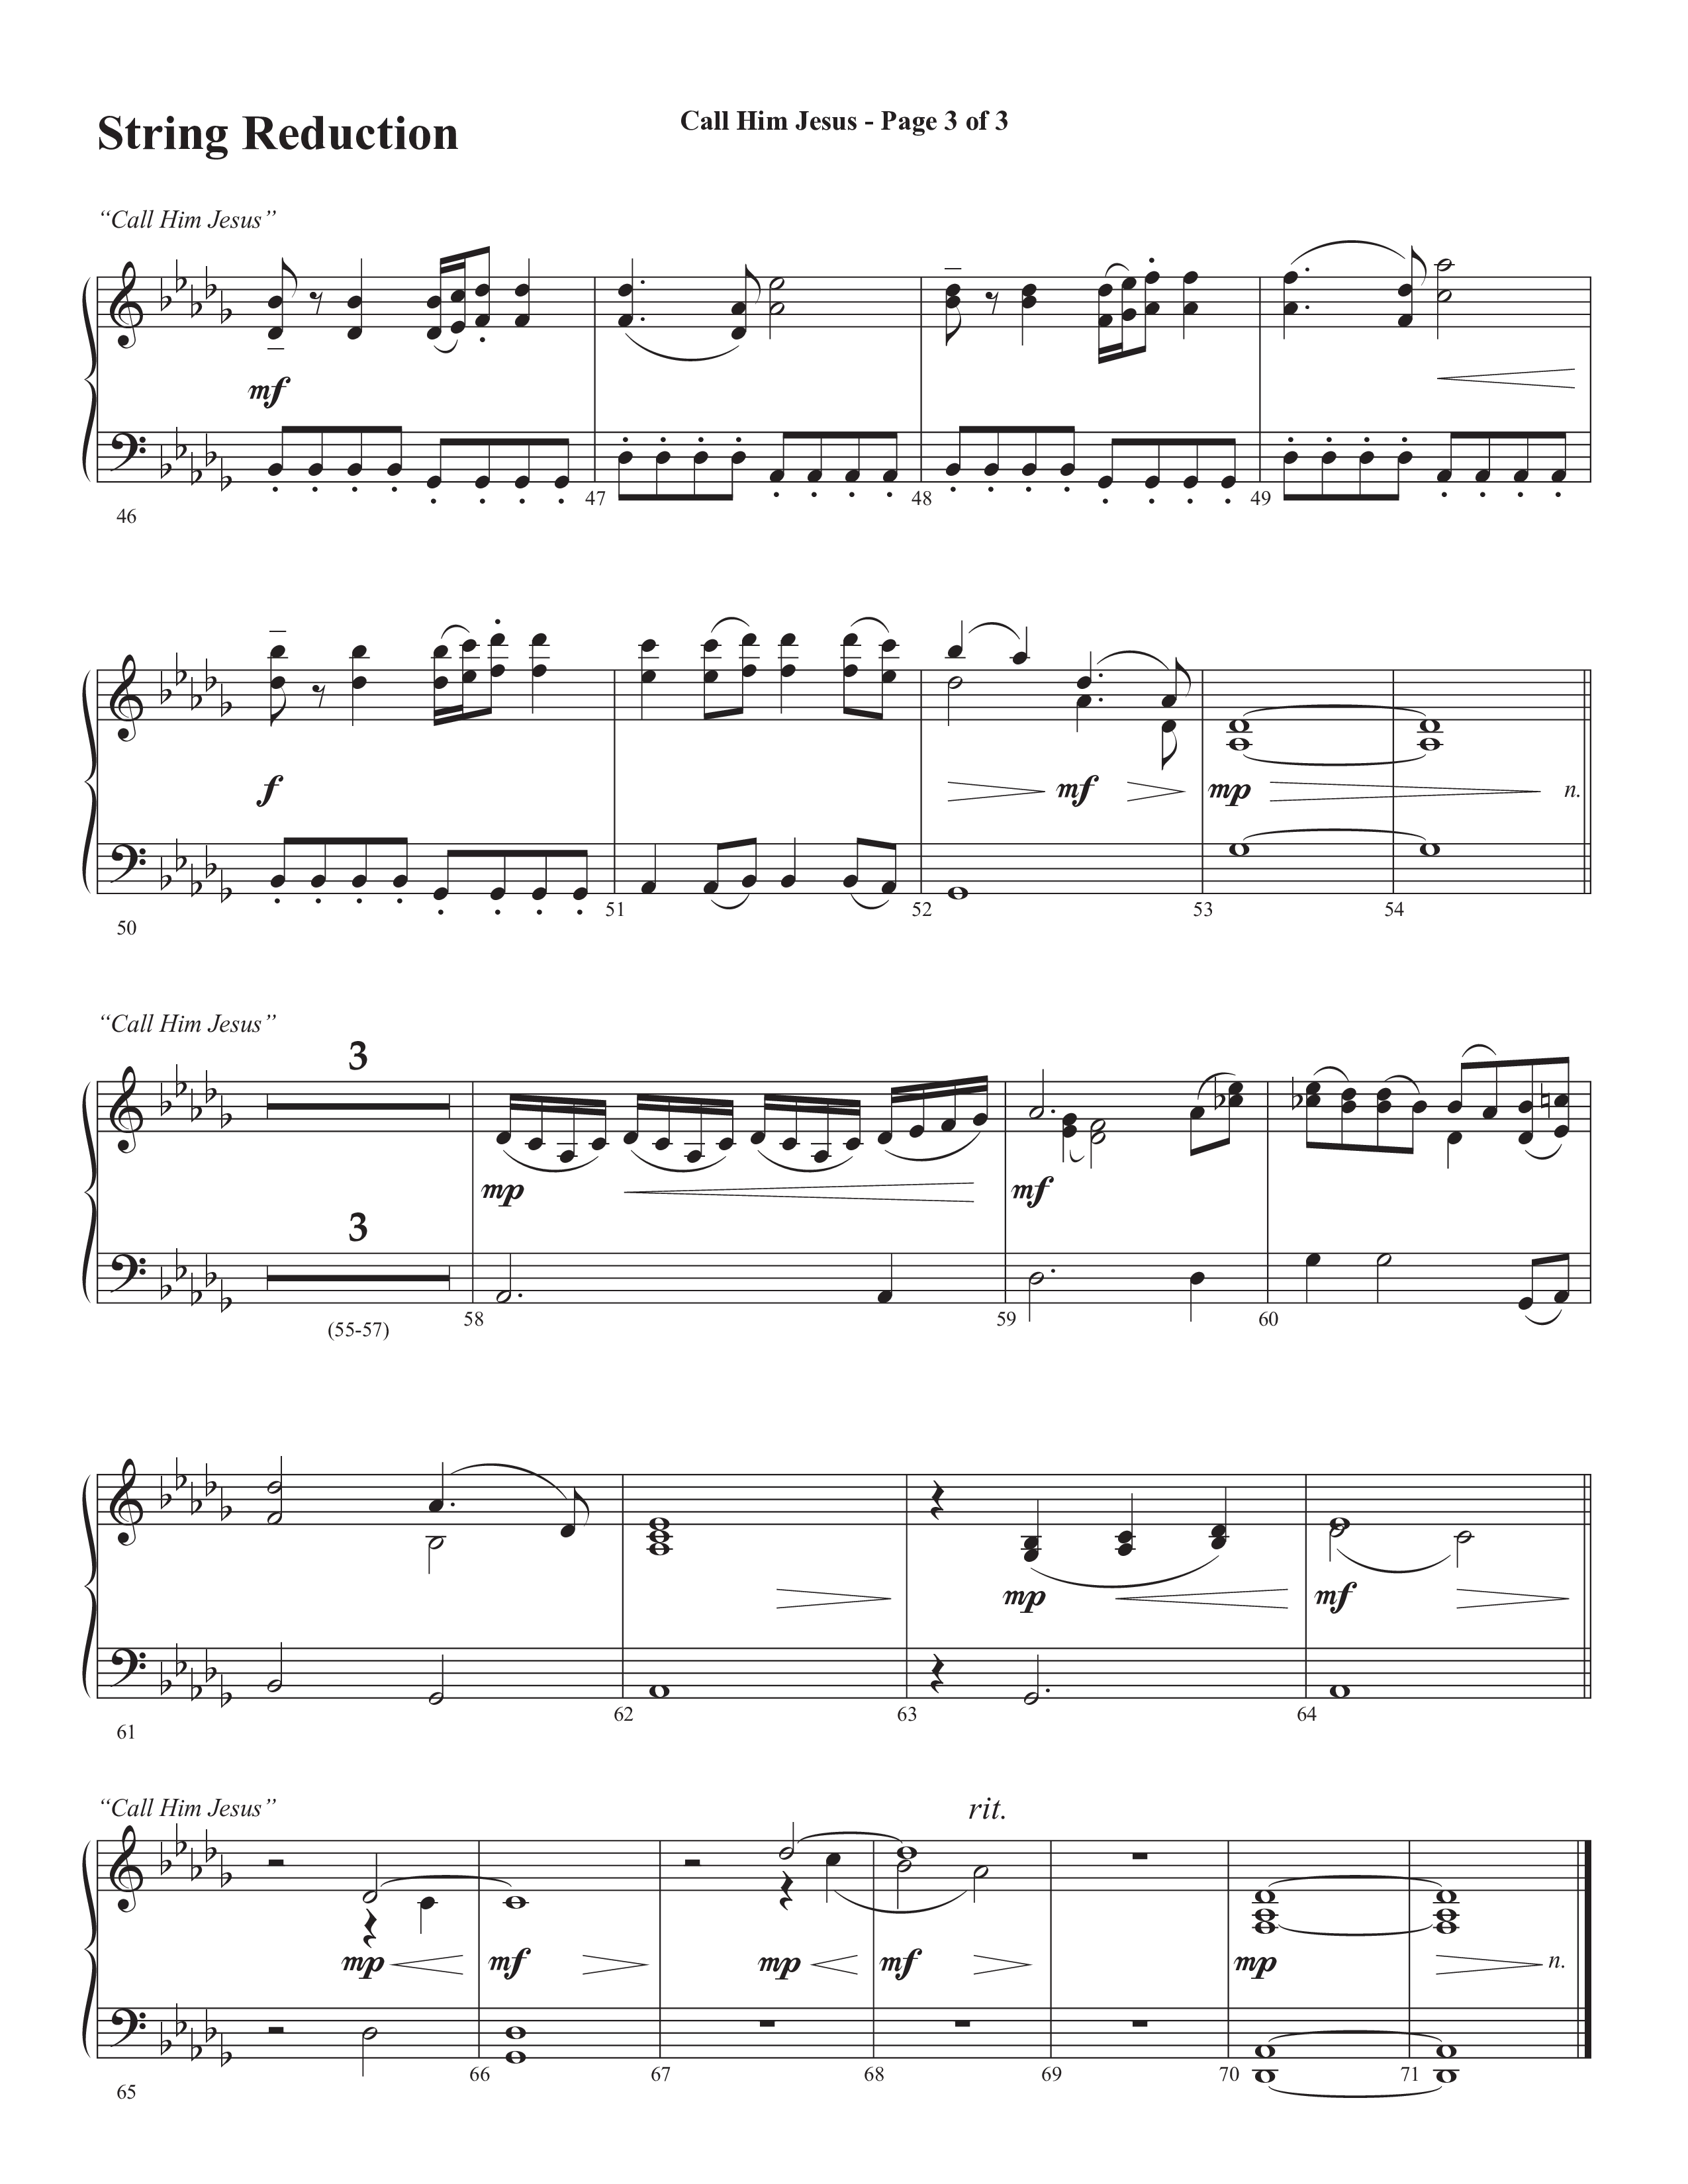 Call Him Jesus (Choral Anthem SATB) String Reduction (Semsen Music / Arr. Daniel Semsen)